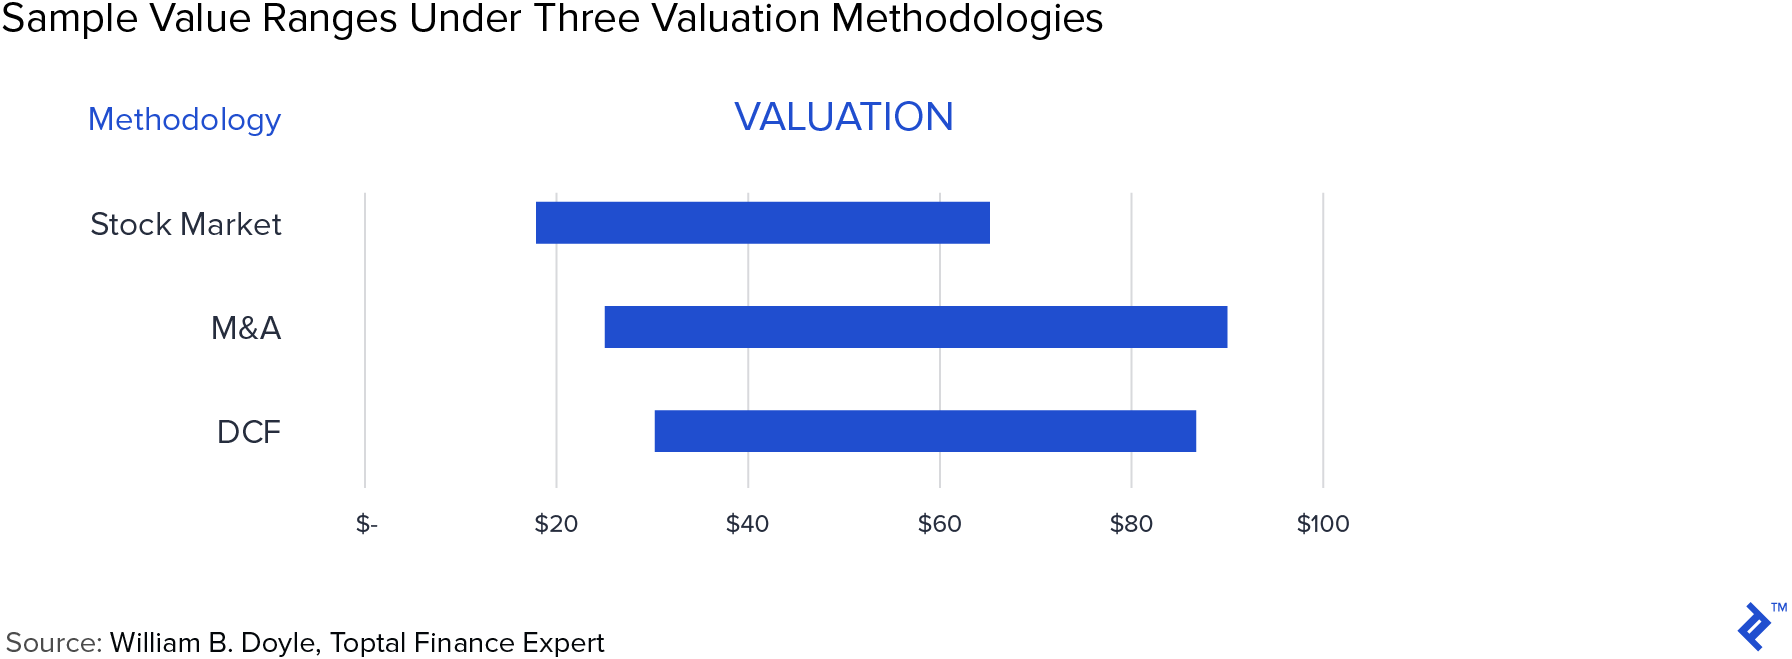 Sample value ranges under three valuation methodologies